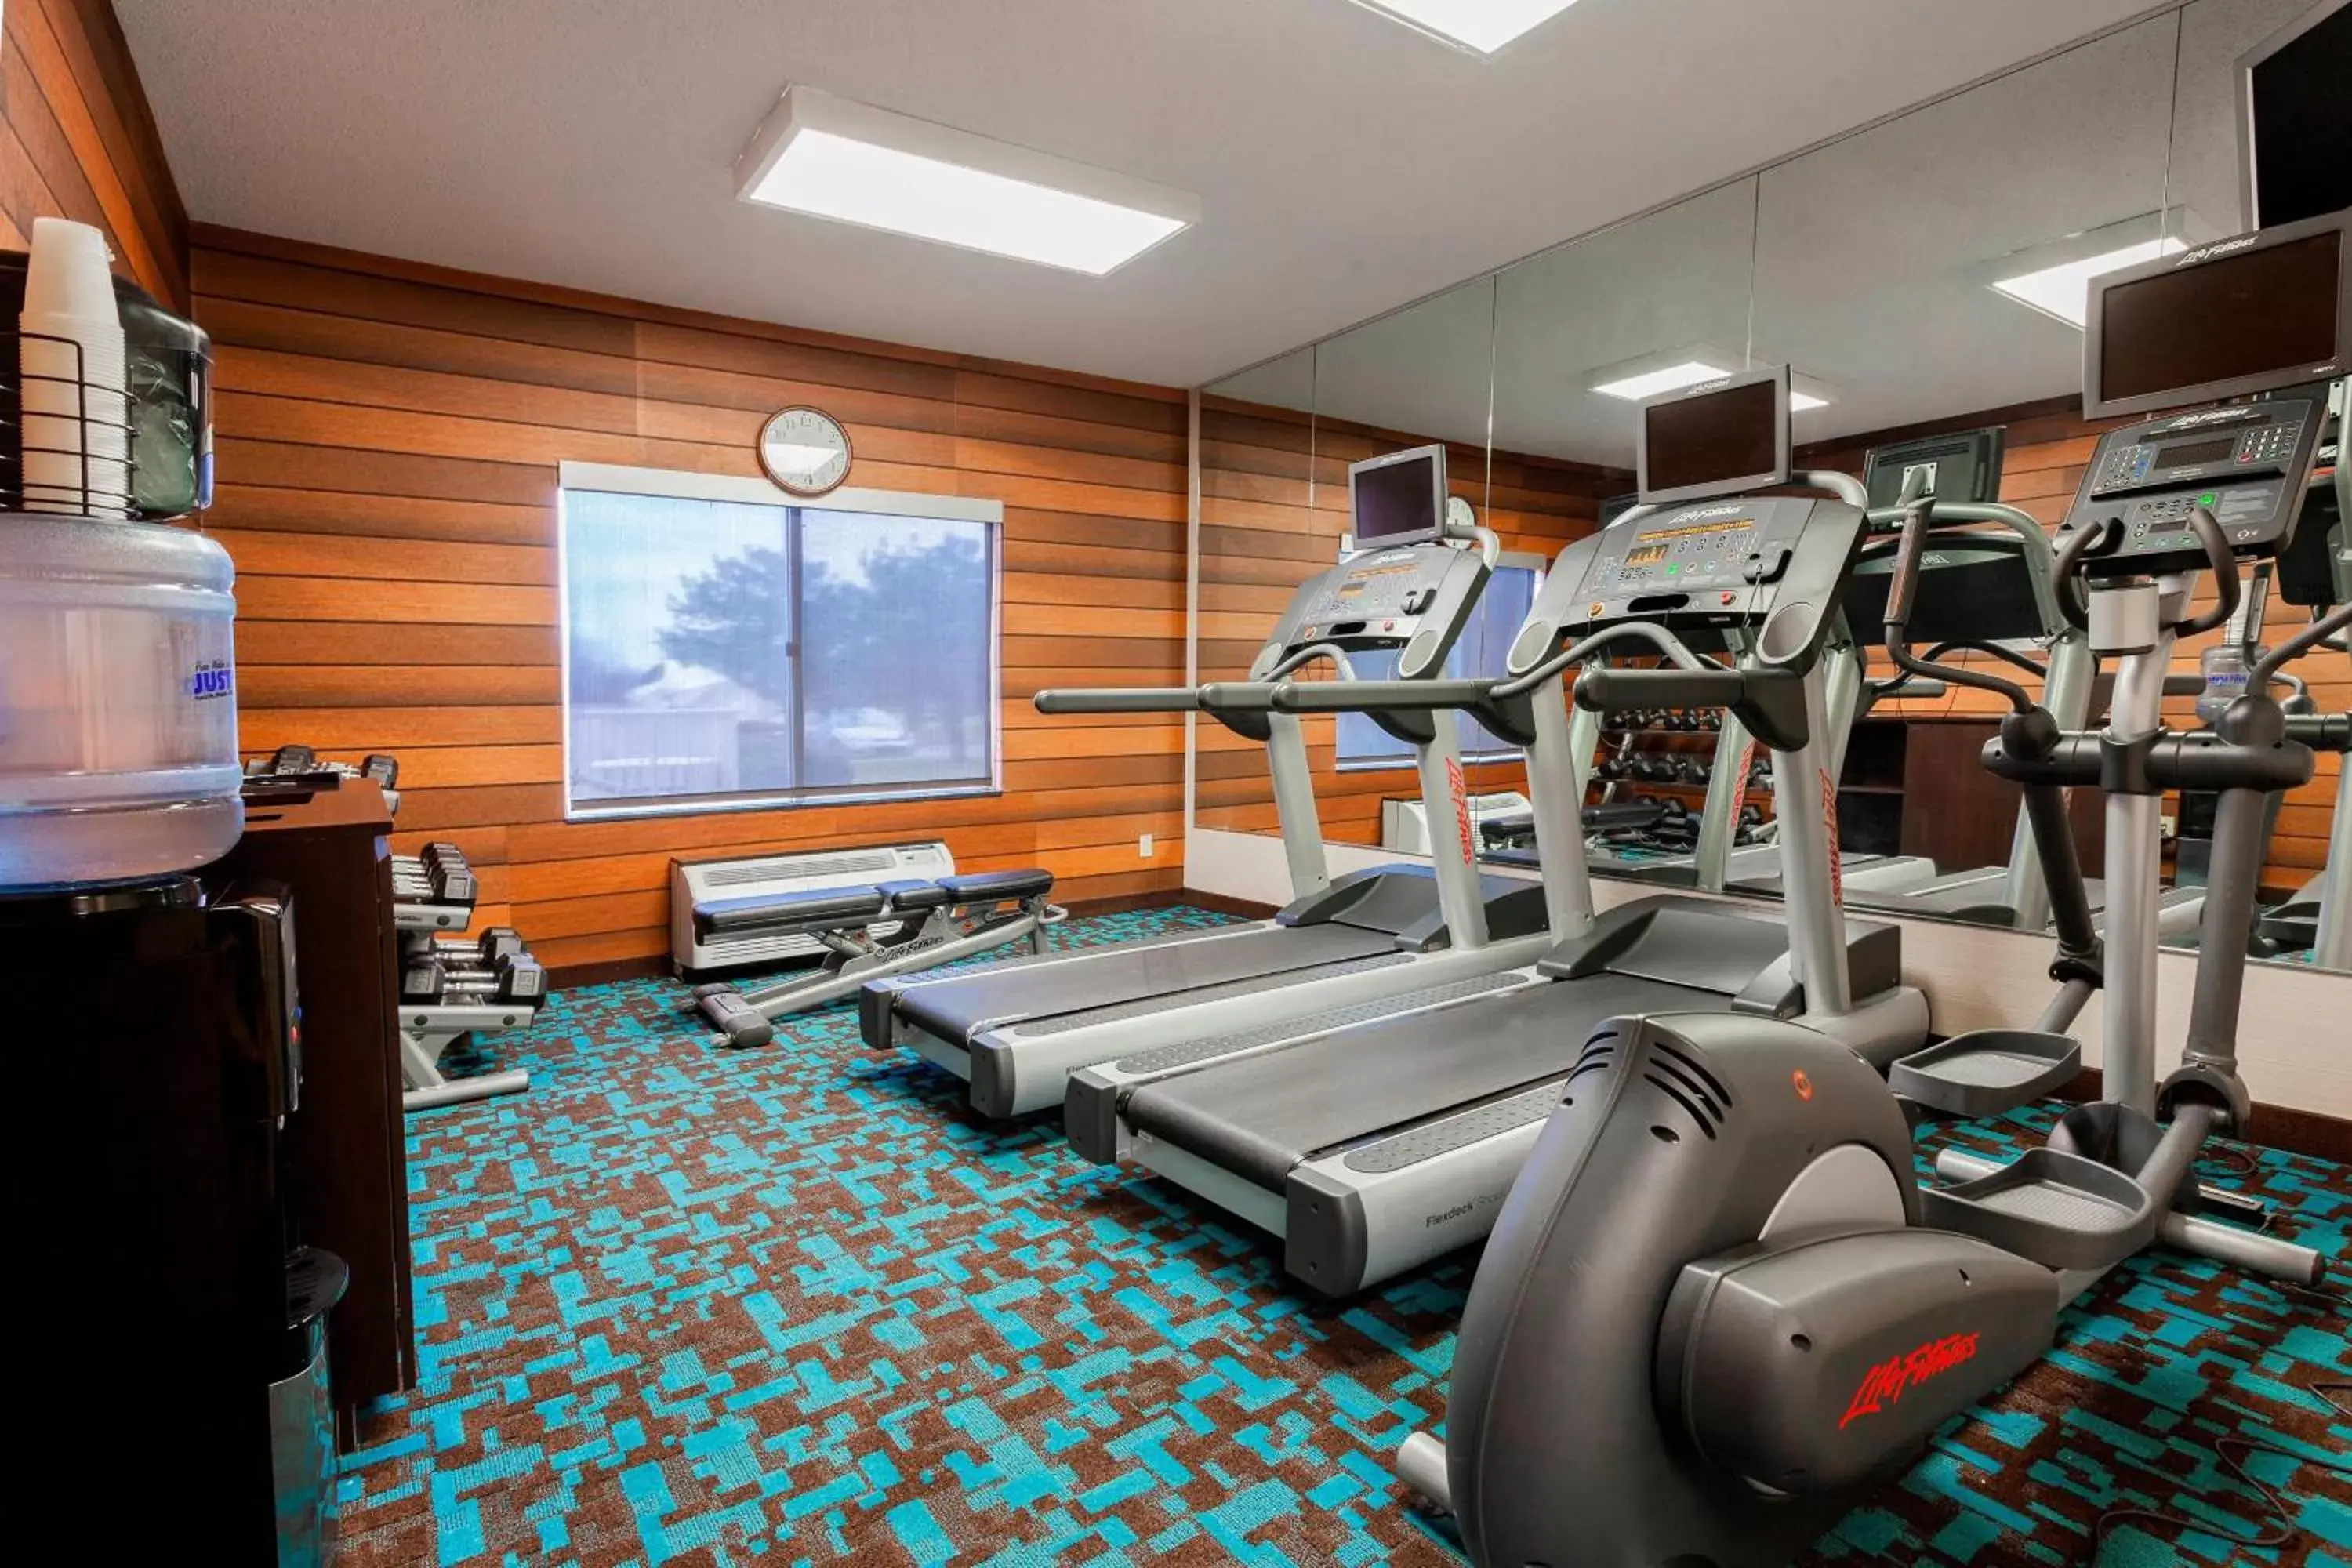 Fitness centre/facilities, Fitness Center/Facilities in Fairfield Inn by Marriott Ponca City